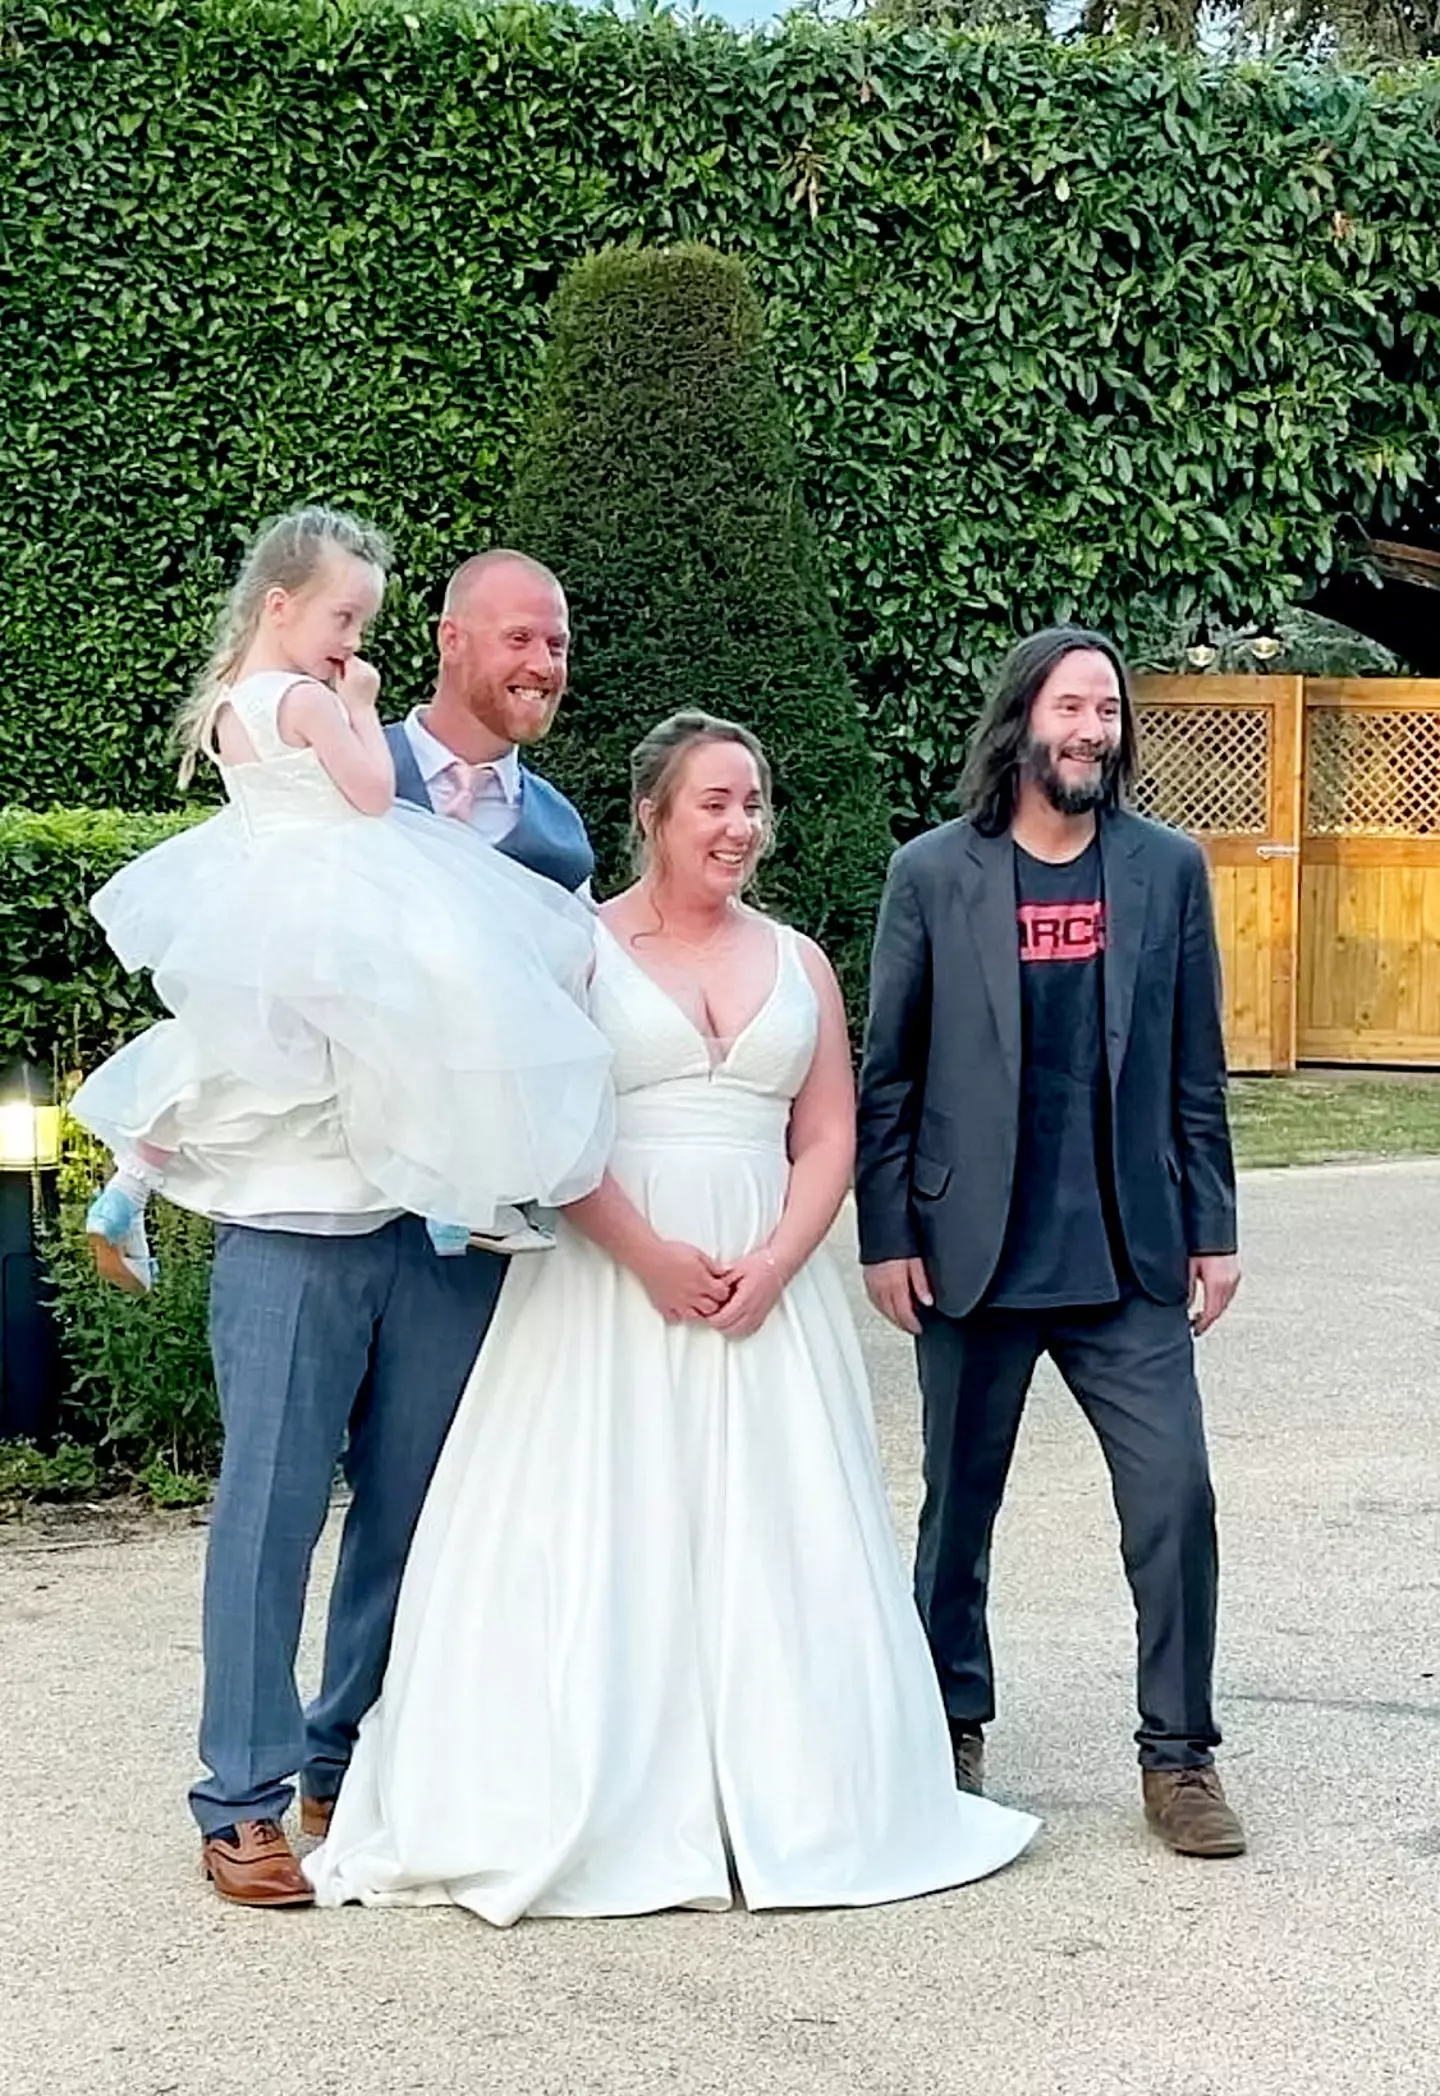 Keanu got into some of the wedding photos.